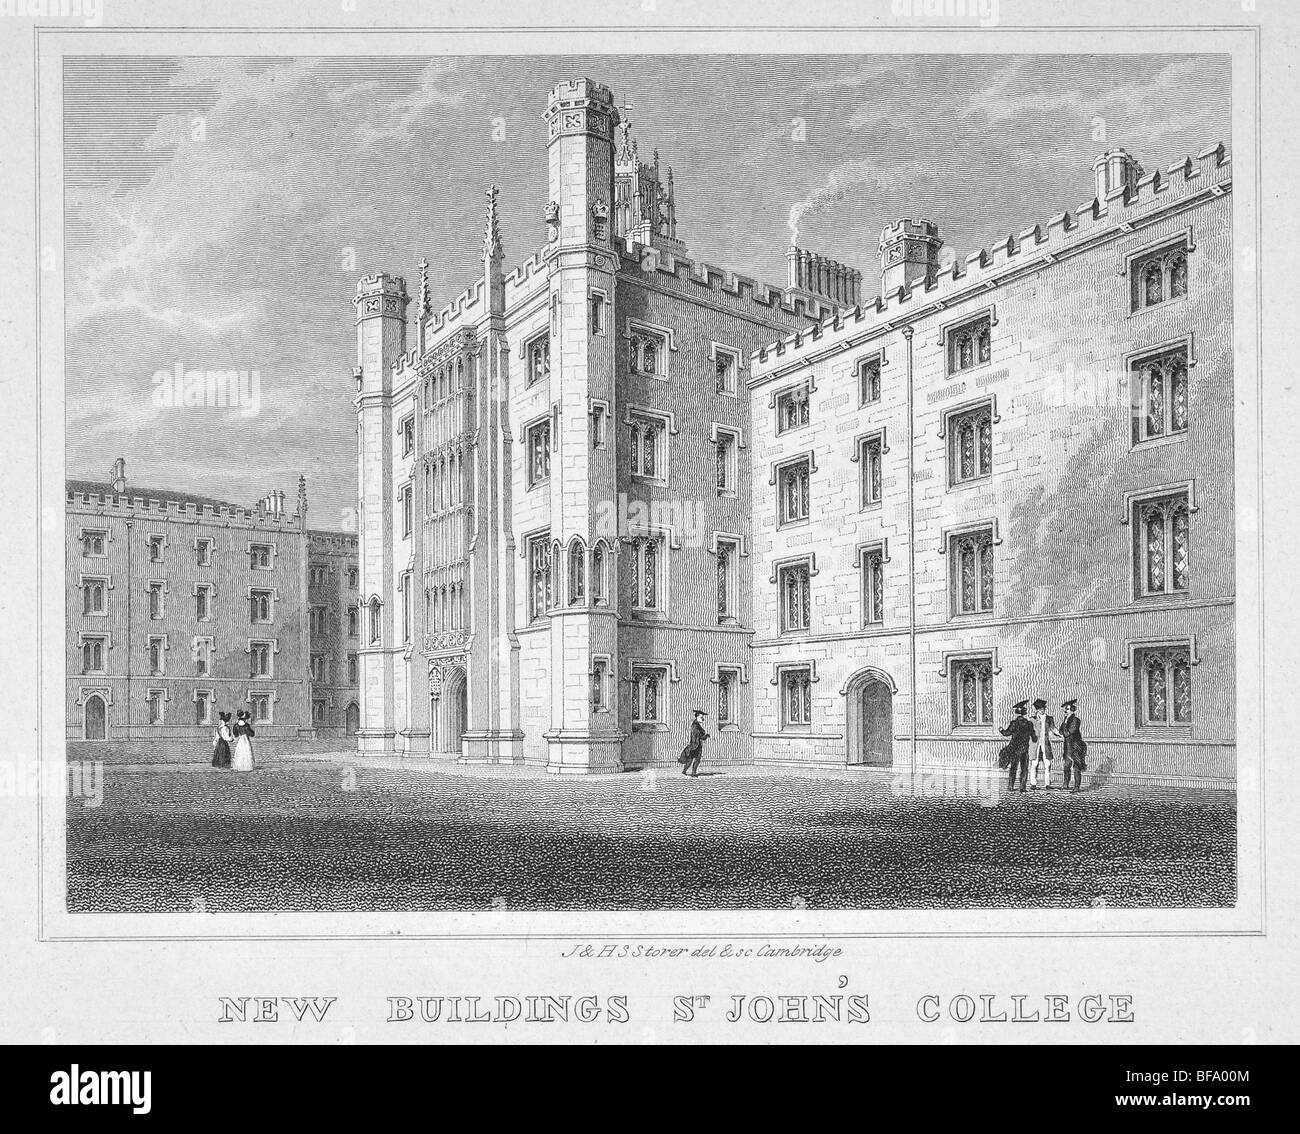 St John's College, Cambridge - Nuevos edificios Foto de stock